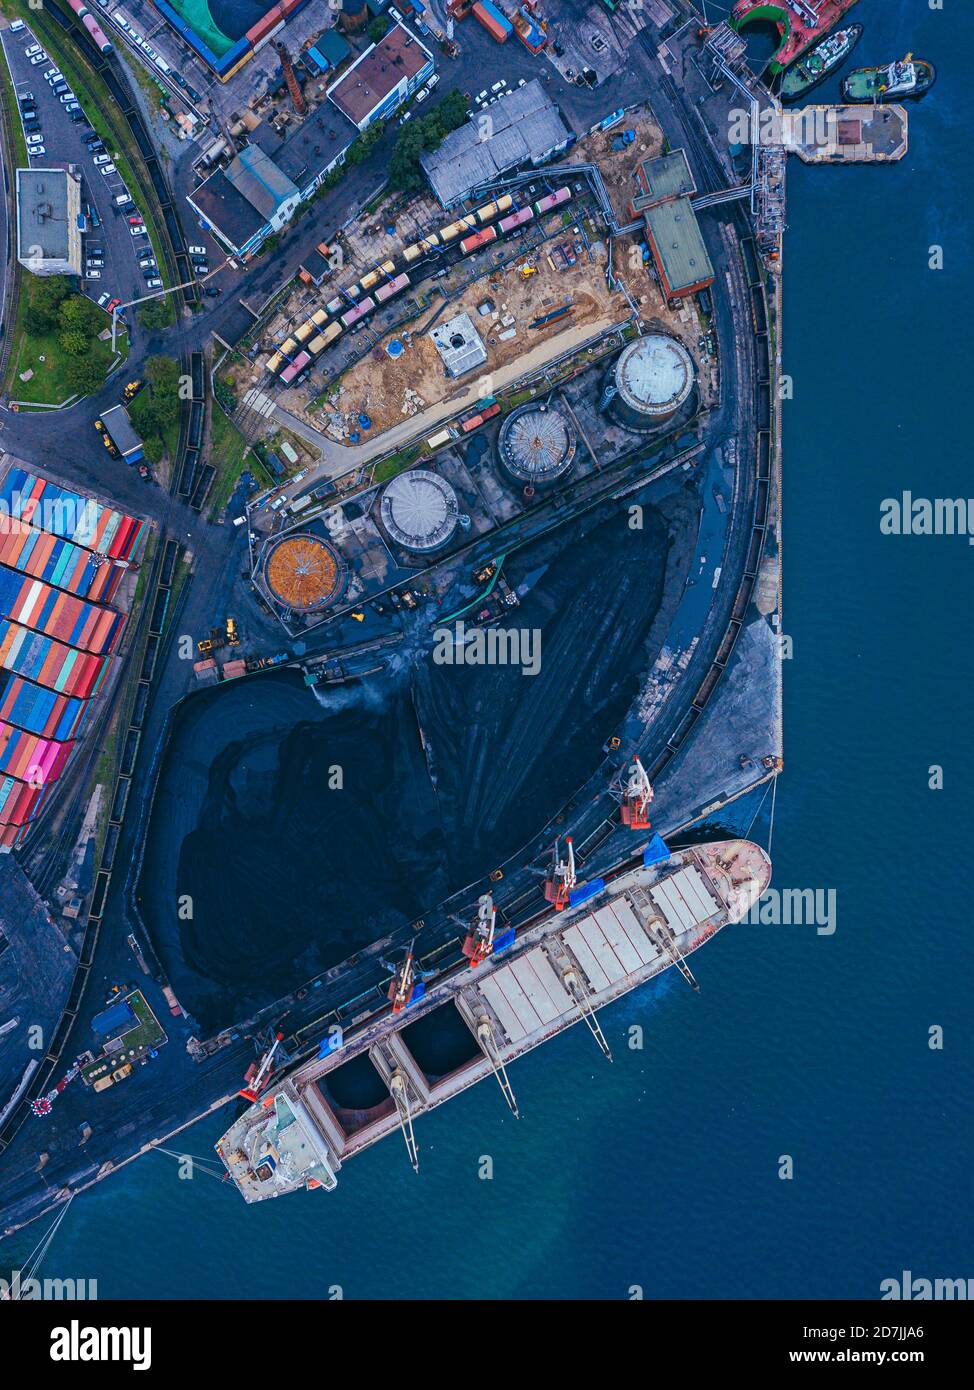 Russia, Primorsky Krai, Vladivostok, Aerial view of industrial ship moored in coal loading dock Stock Photo